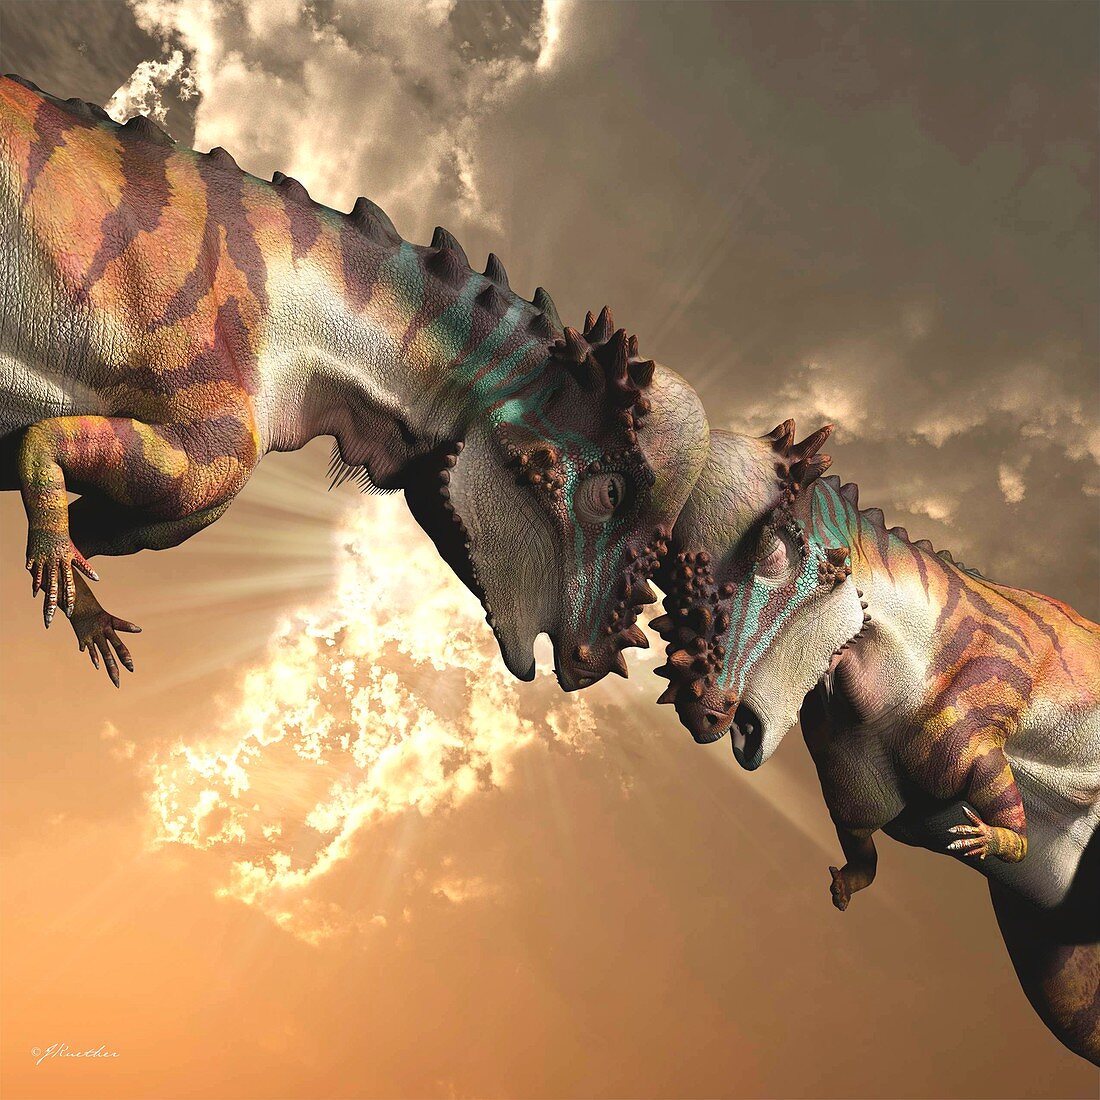 Pair of Pachycephalosaurus dinosaurs, illustration